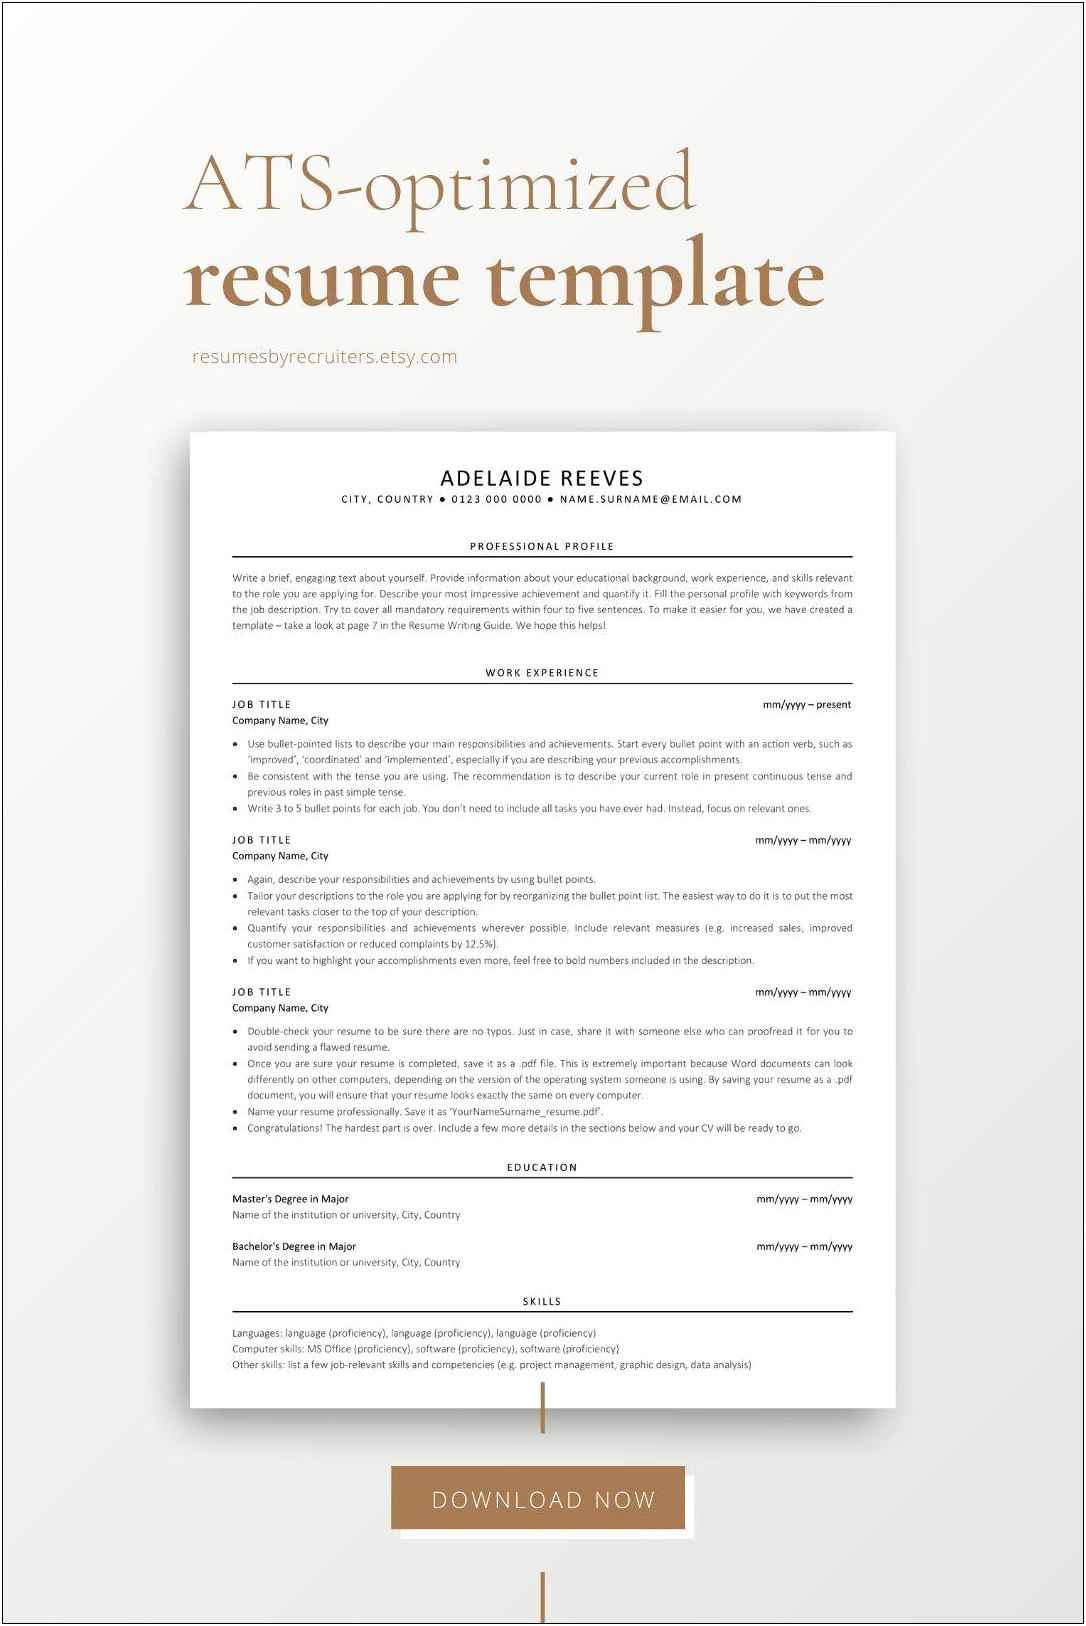 Resume Computer Skills Ms Office